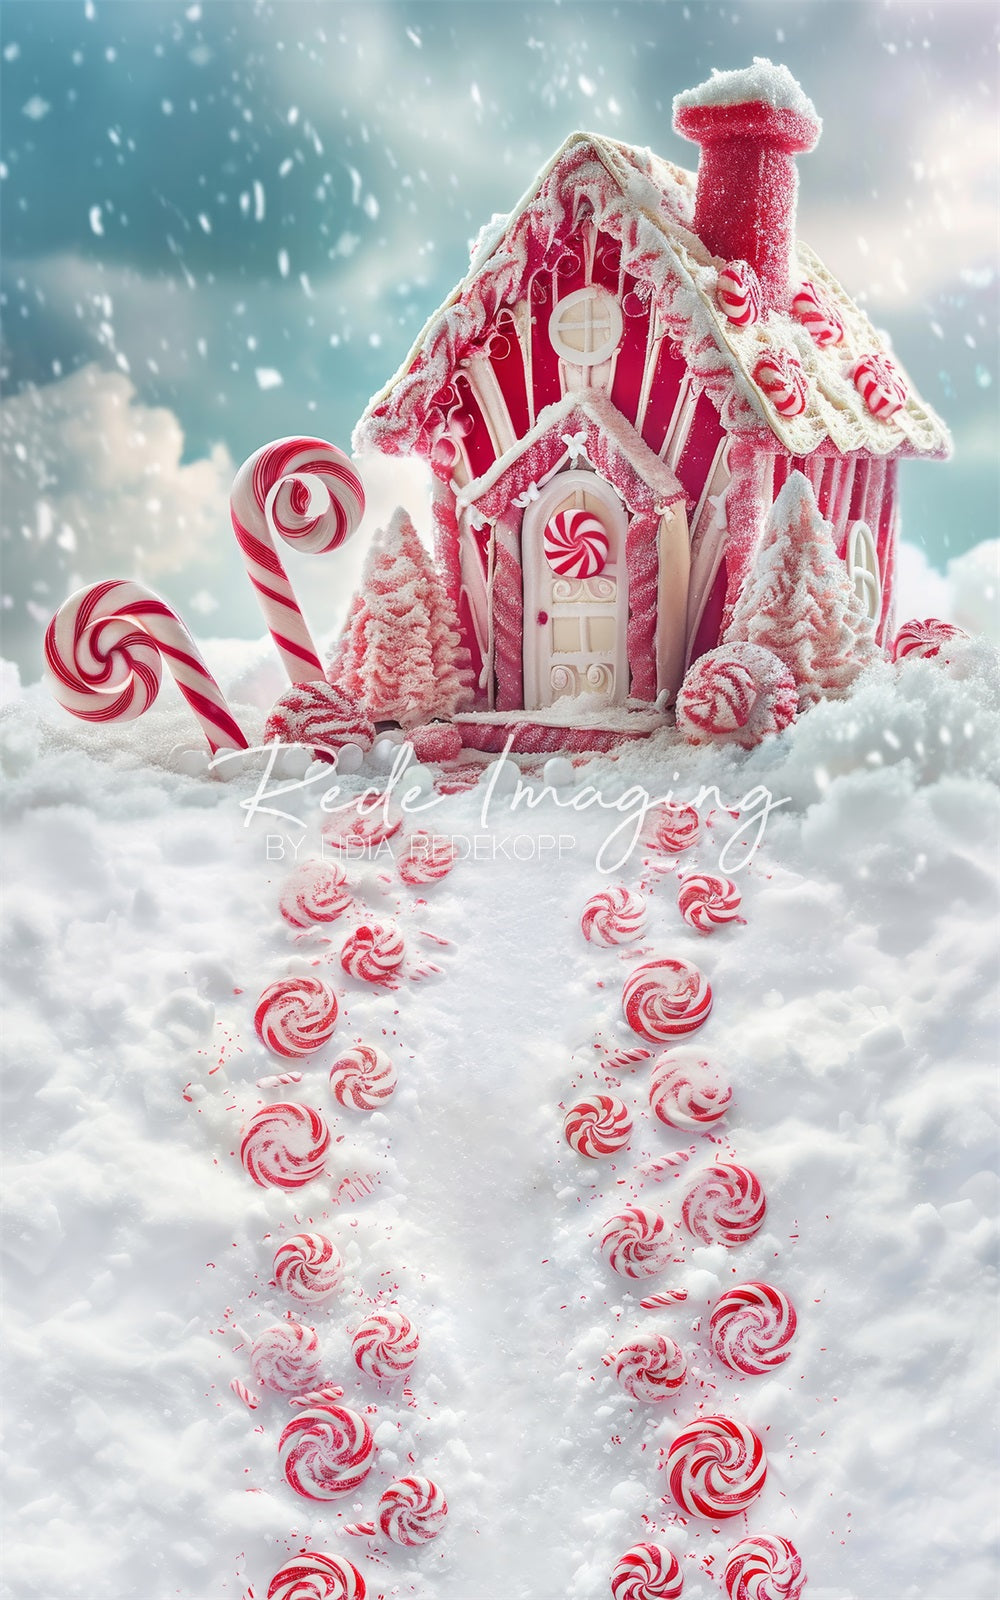 Sweep Winter Red Fantasy Candy Hut Foto Achtergrond Designed by Lidia Redekopp